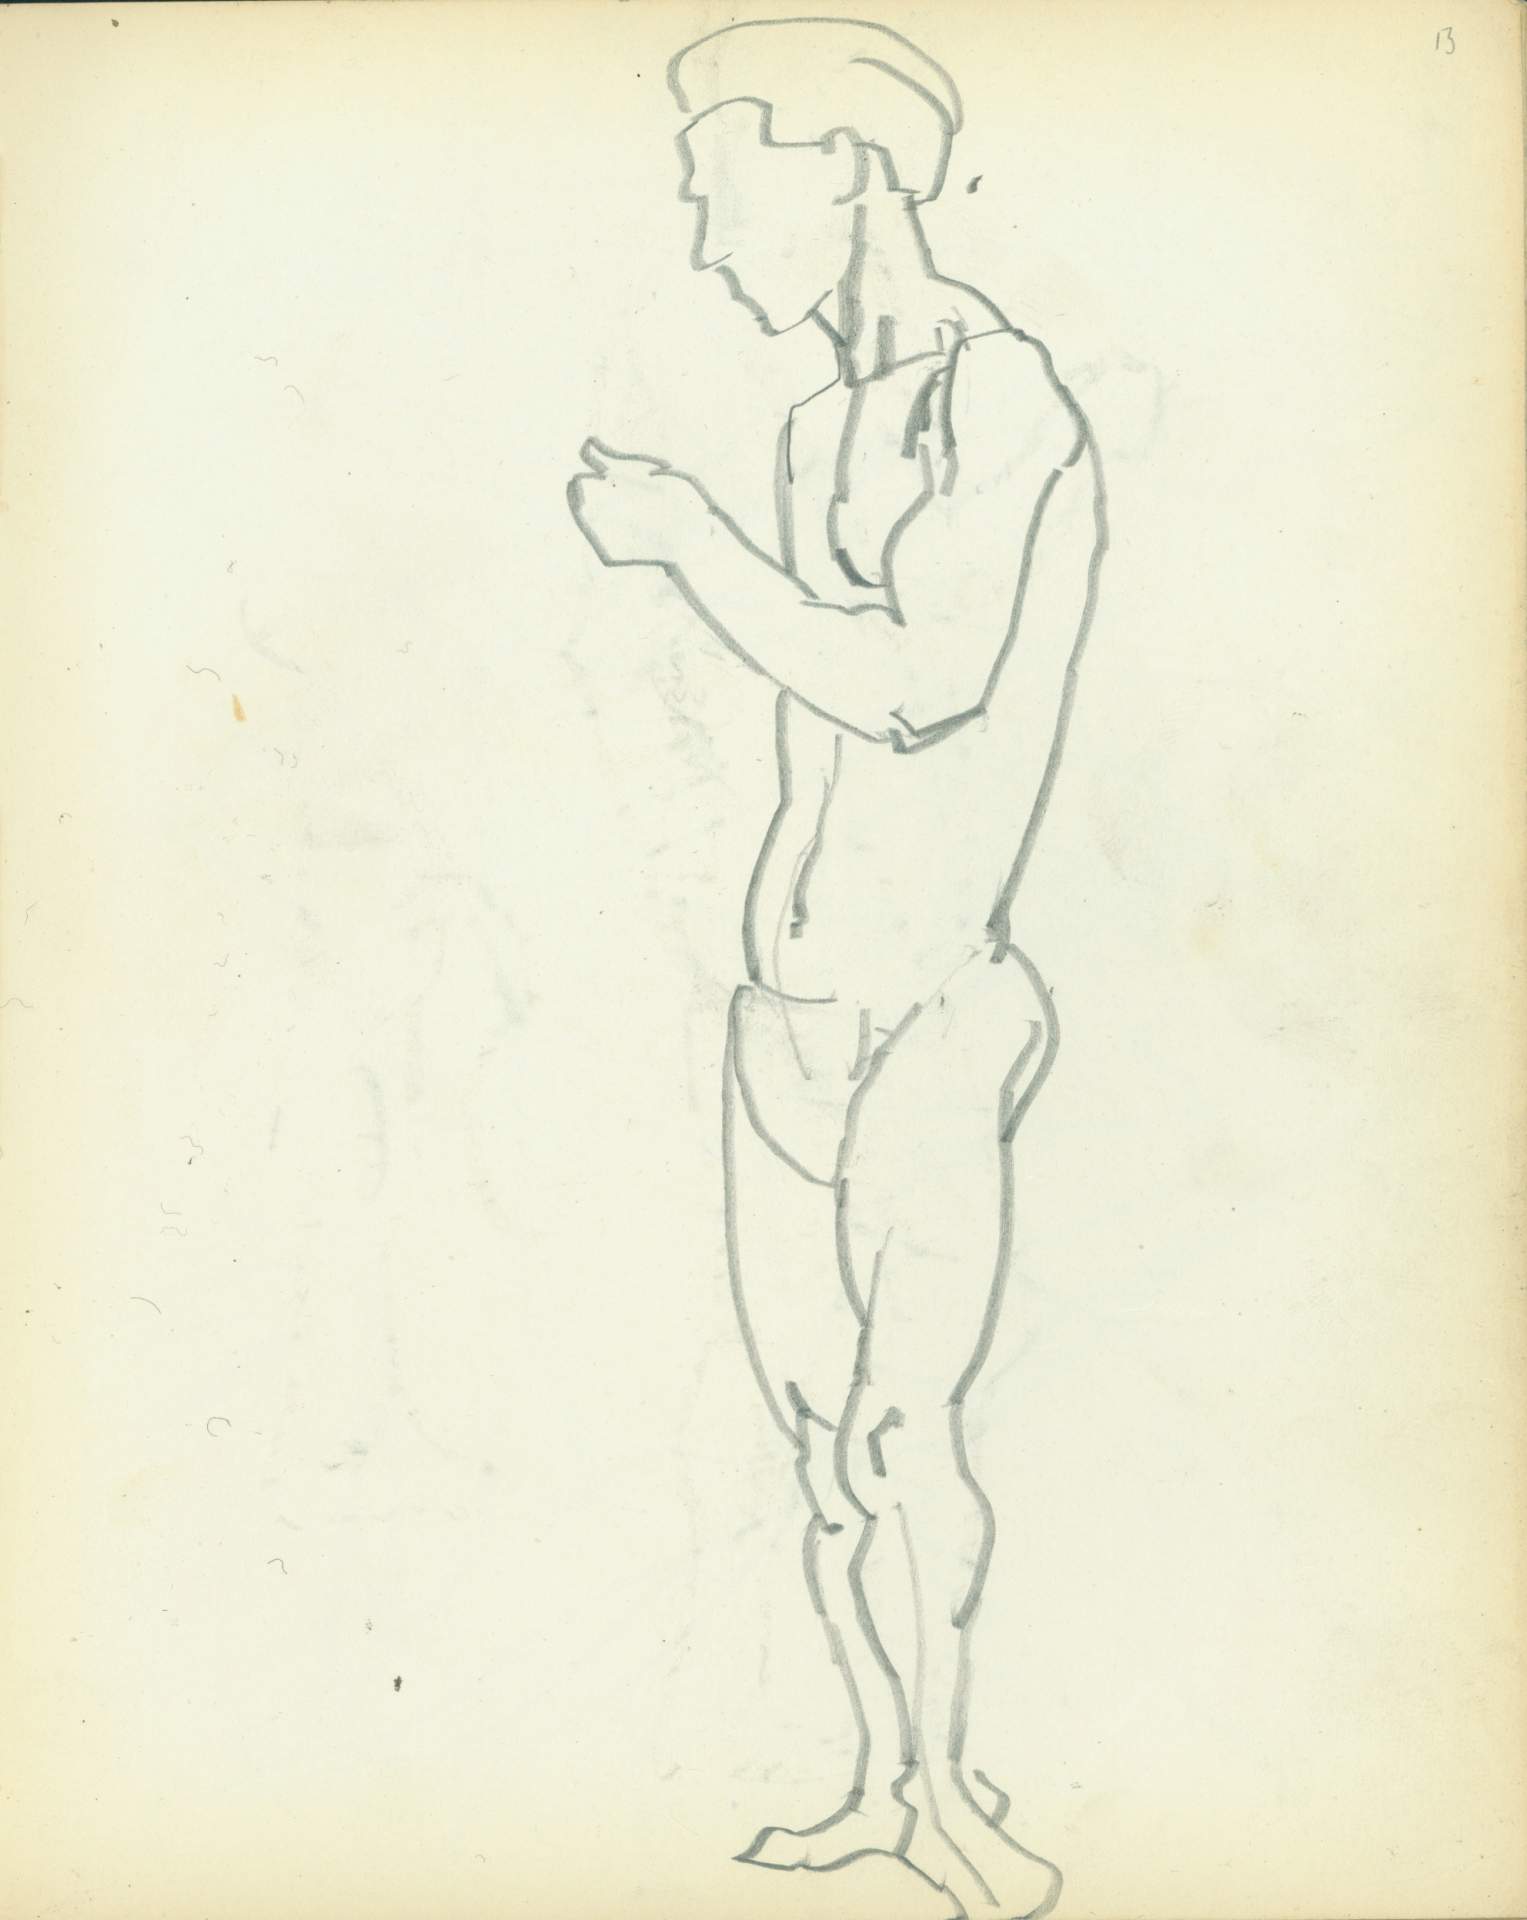 Untitled (male figure sketch)